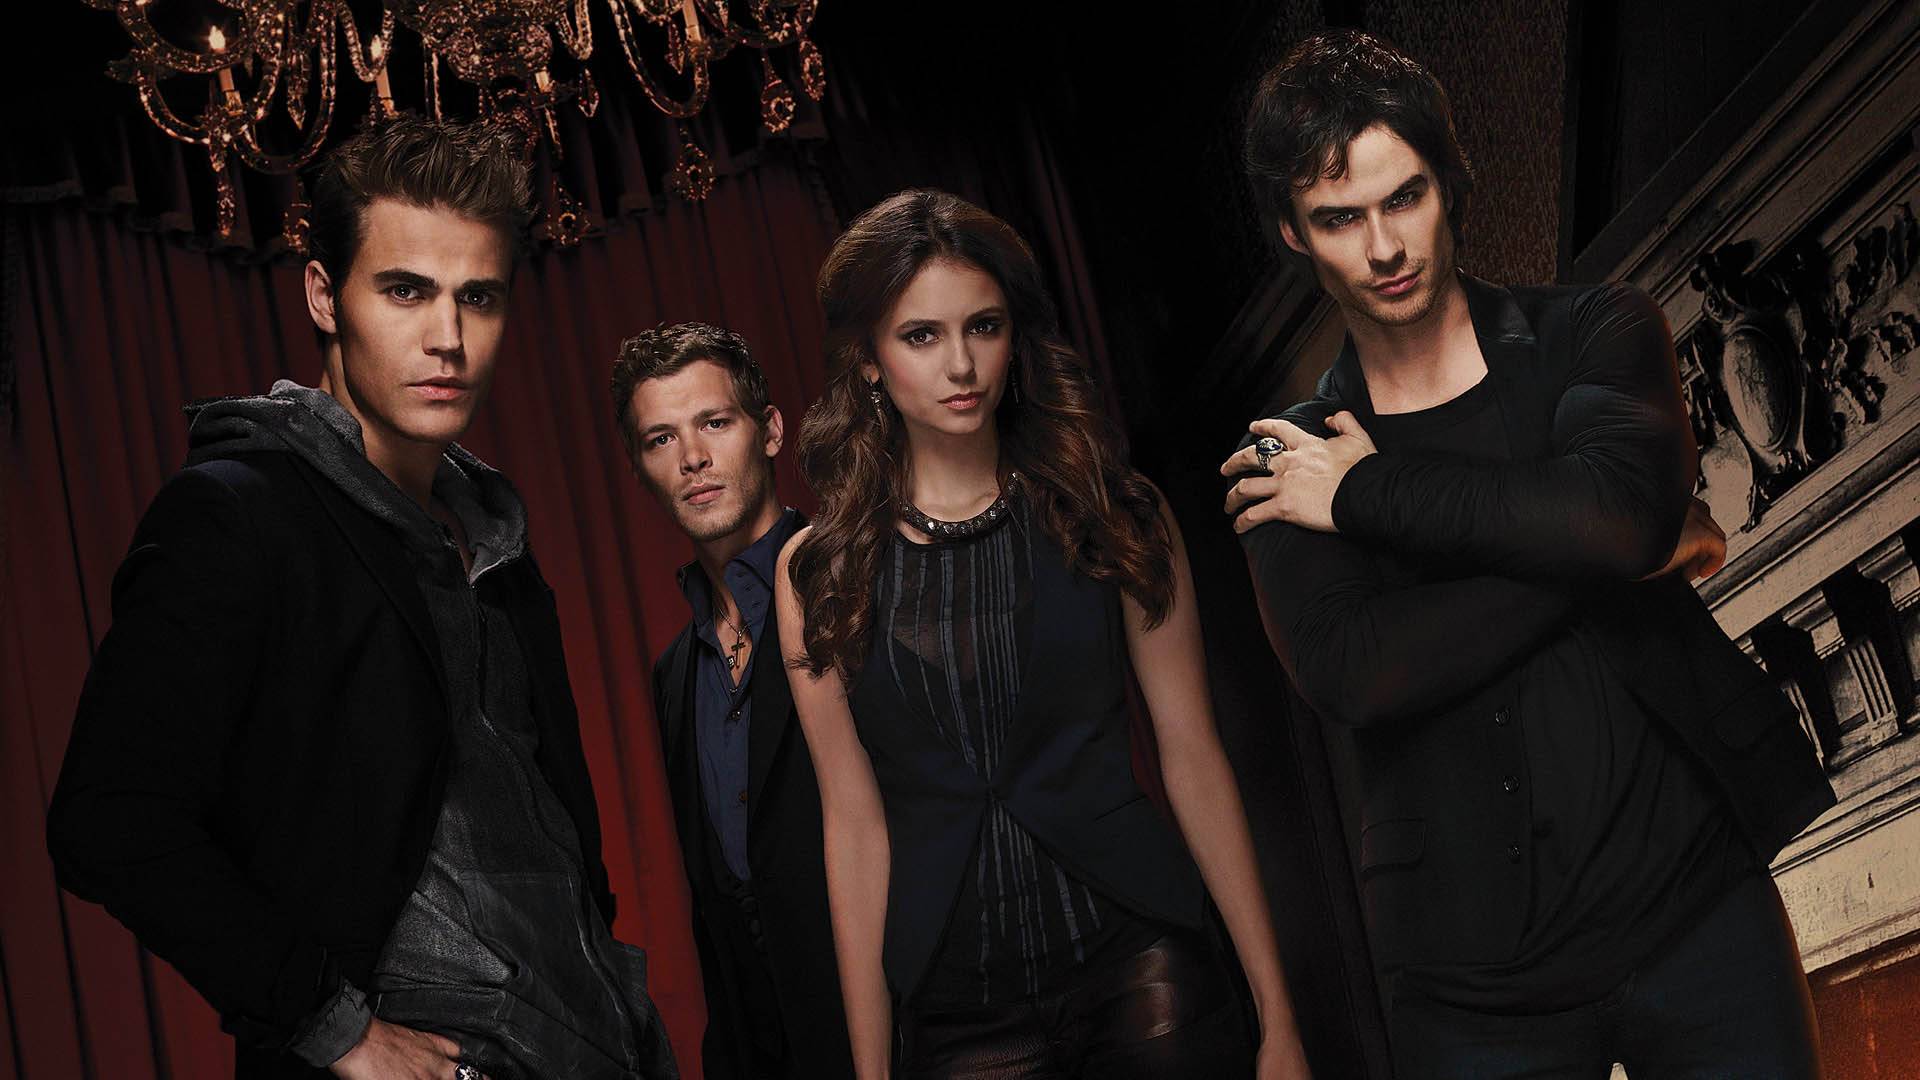 The Vampire Diaries Image. 